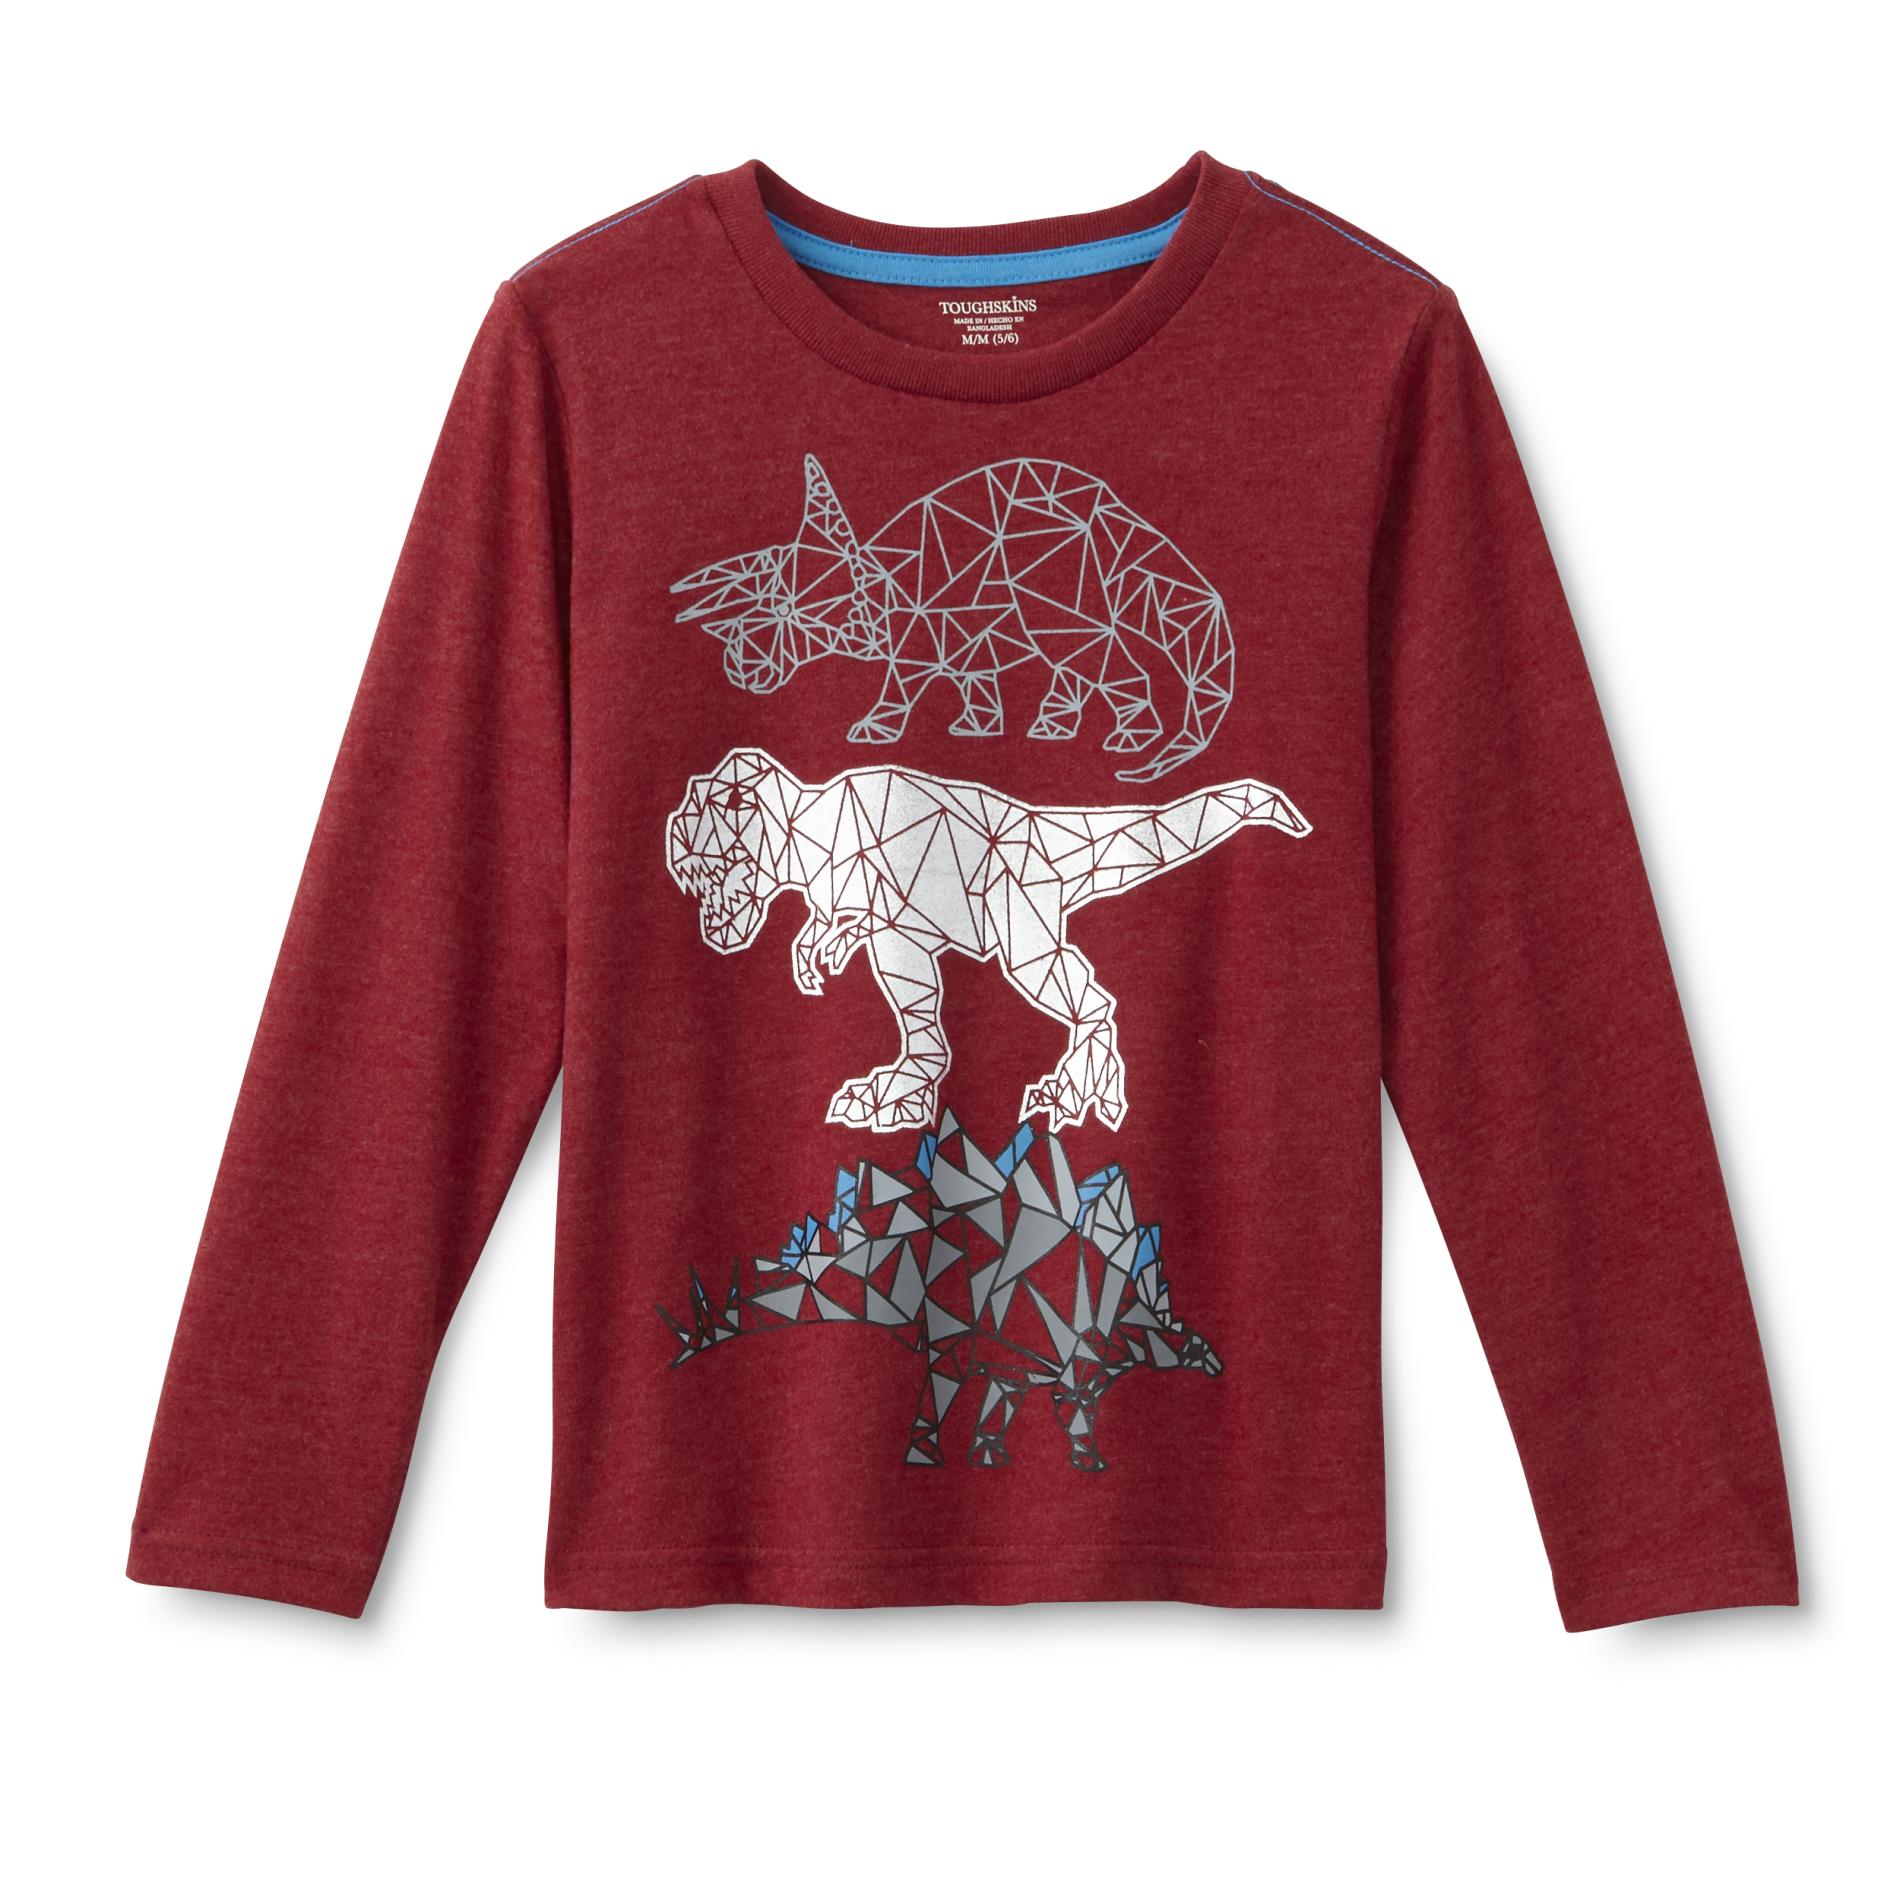 Toughskins Infant & Toddler Boy's Graphic T-Shirt - Dinosaurs